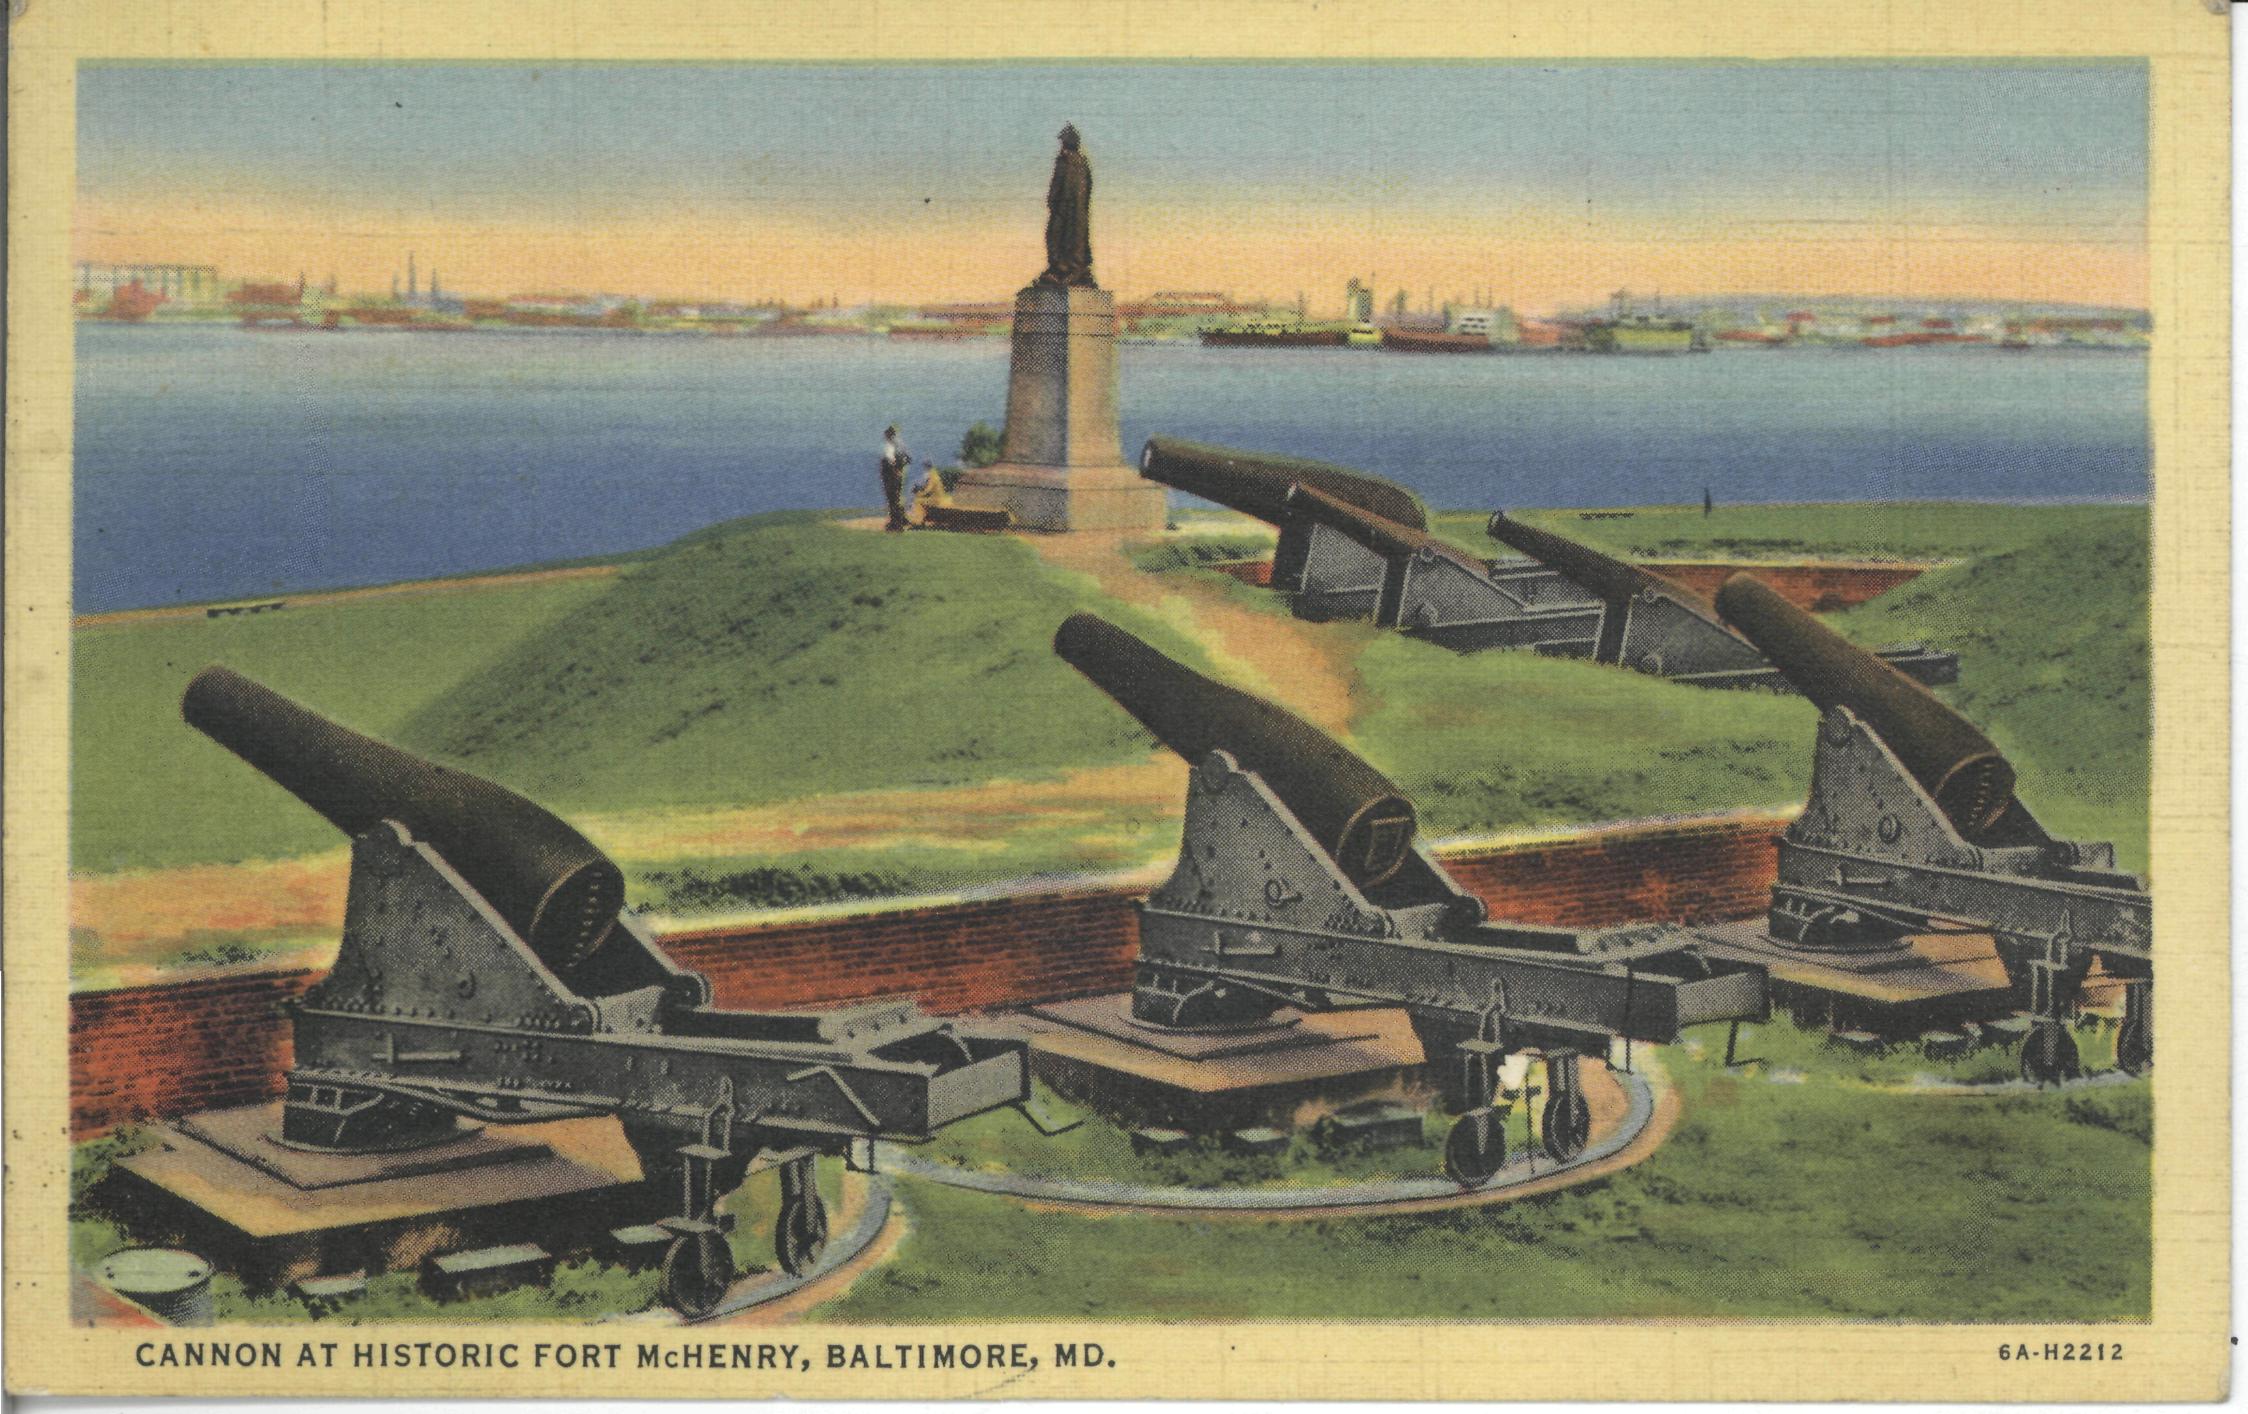 Postcard of Fort McHenry, circa 1940.